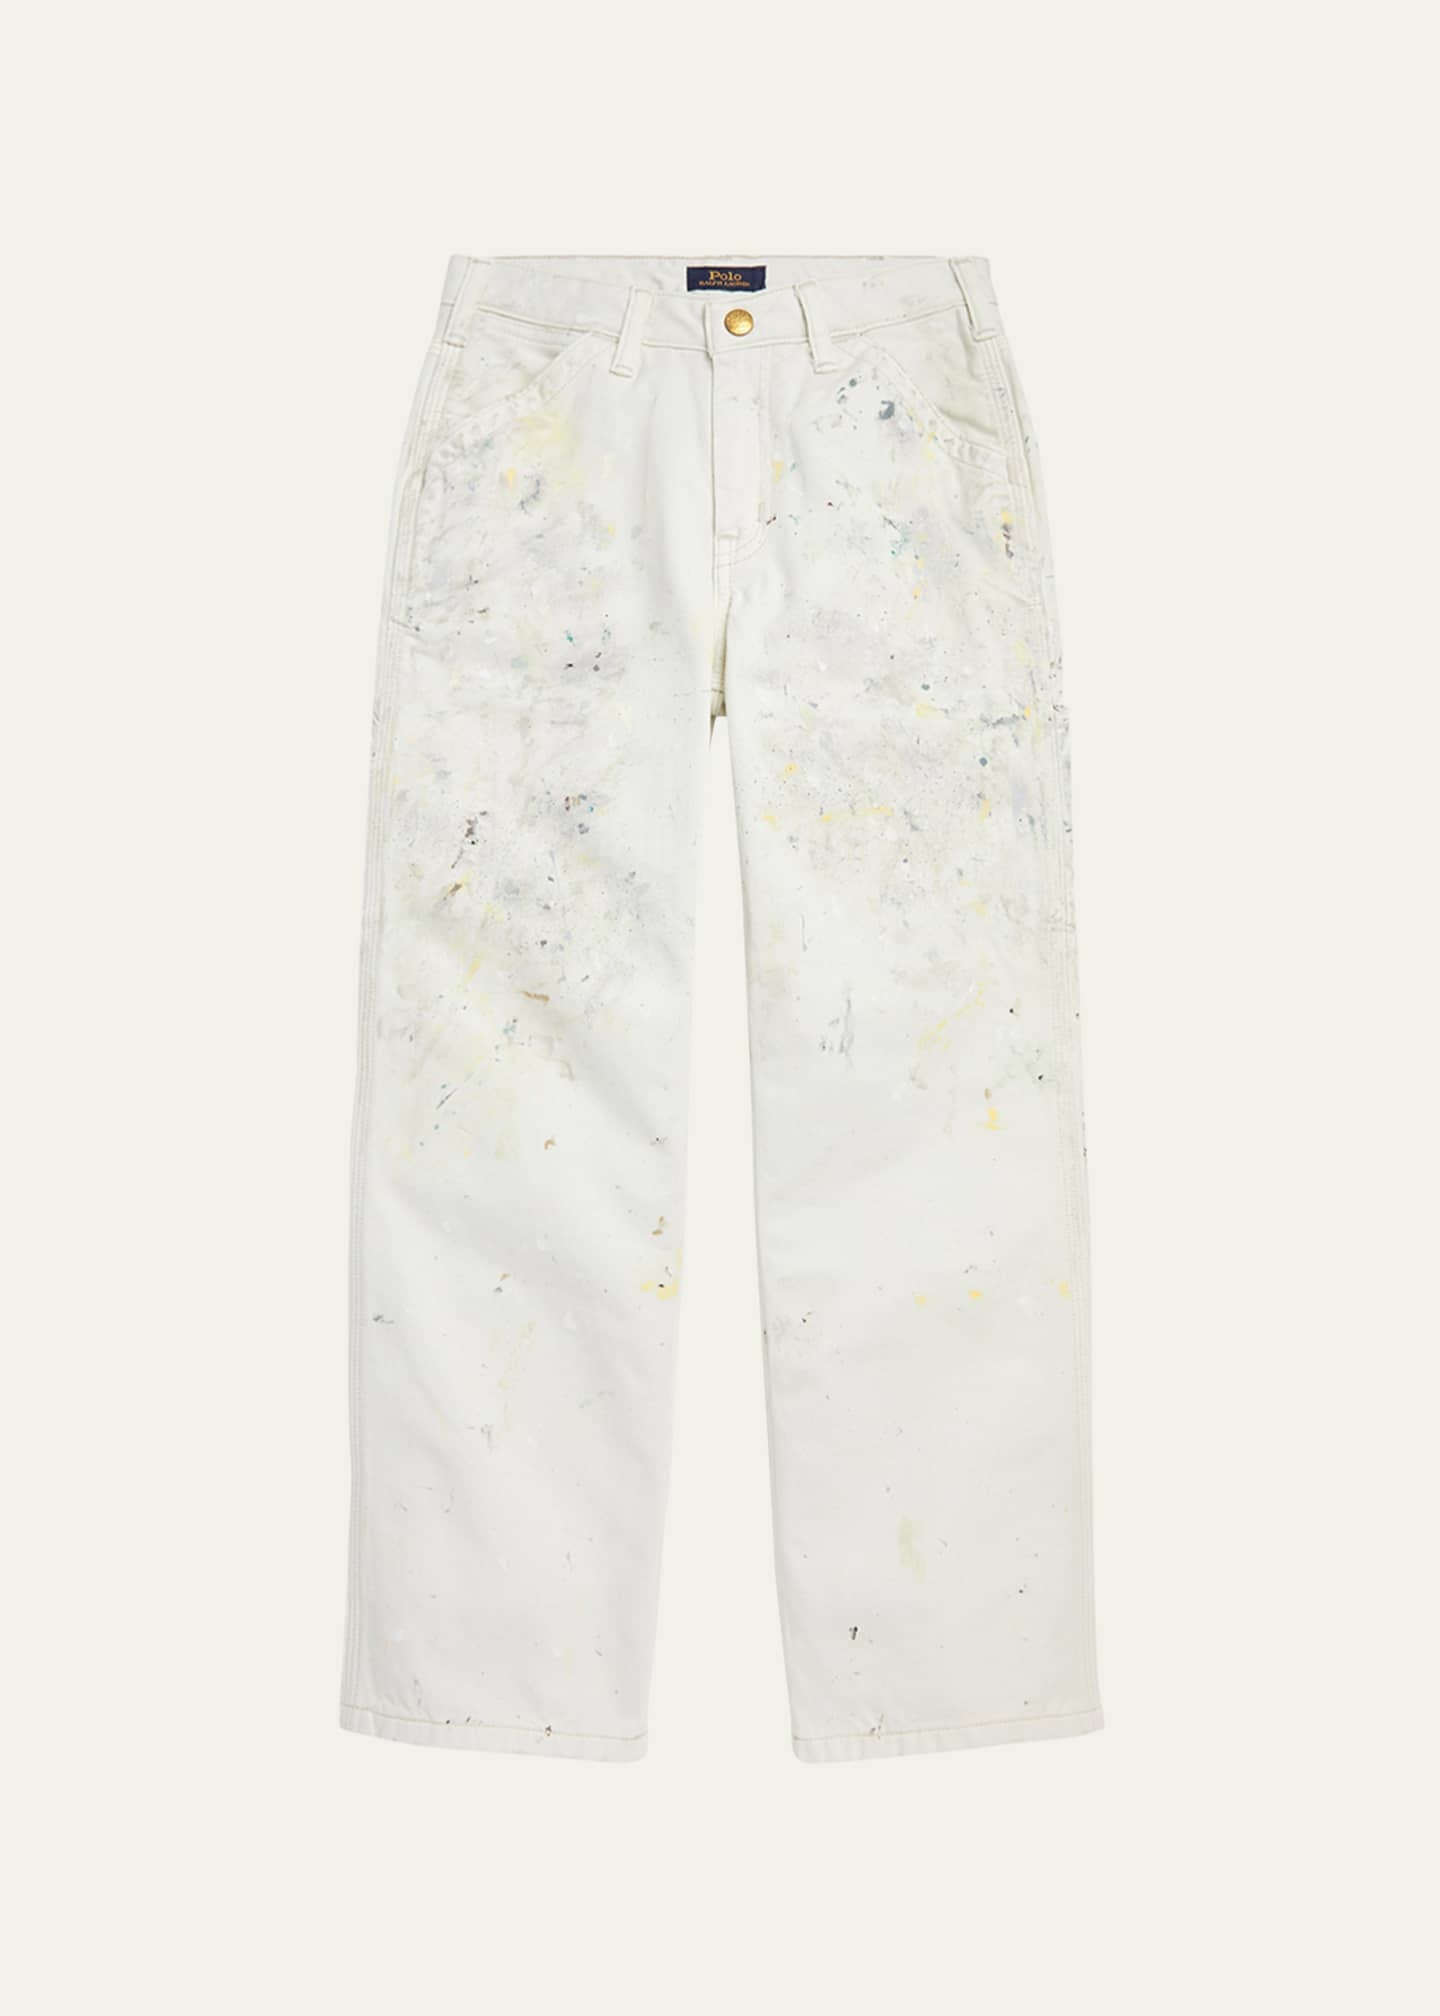 Ralph Lauren Childrenswear Boy's Paint Splatter Cargo Pants, Size 8-20 -  Bergdorf Goodman